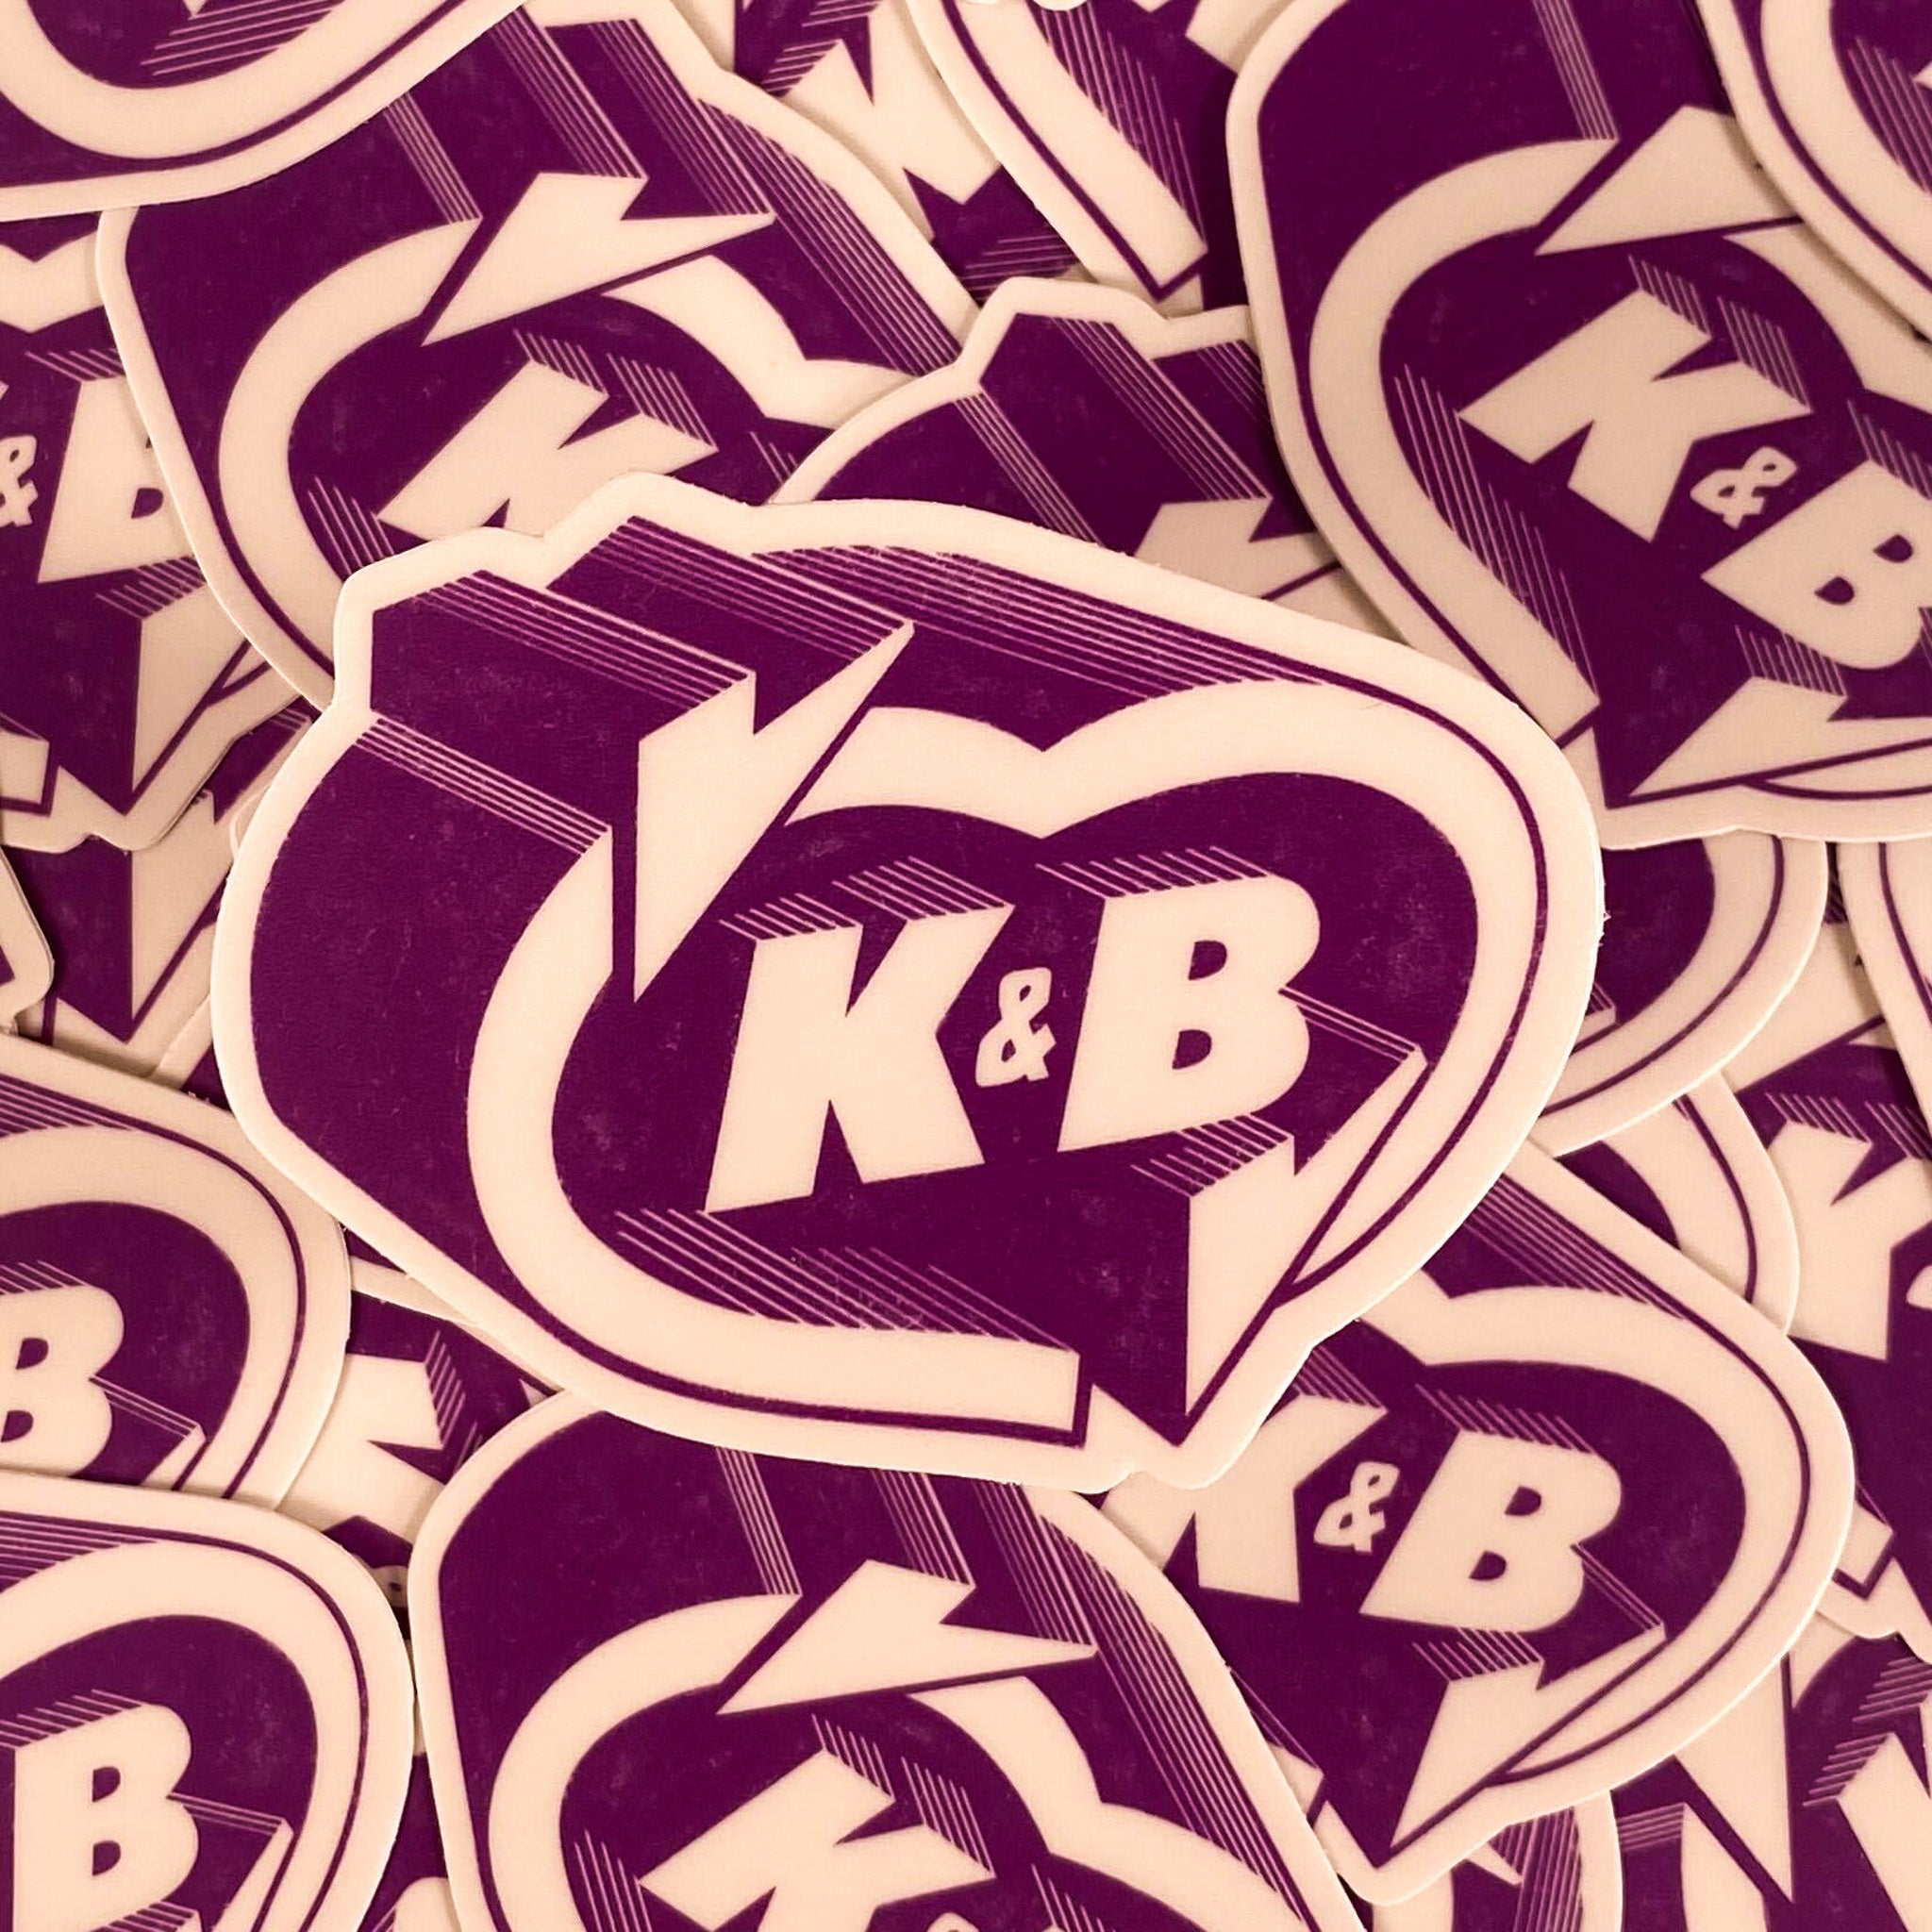 K&B Sticker - Dirty Coast Press